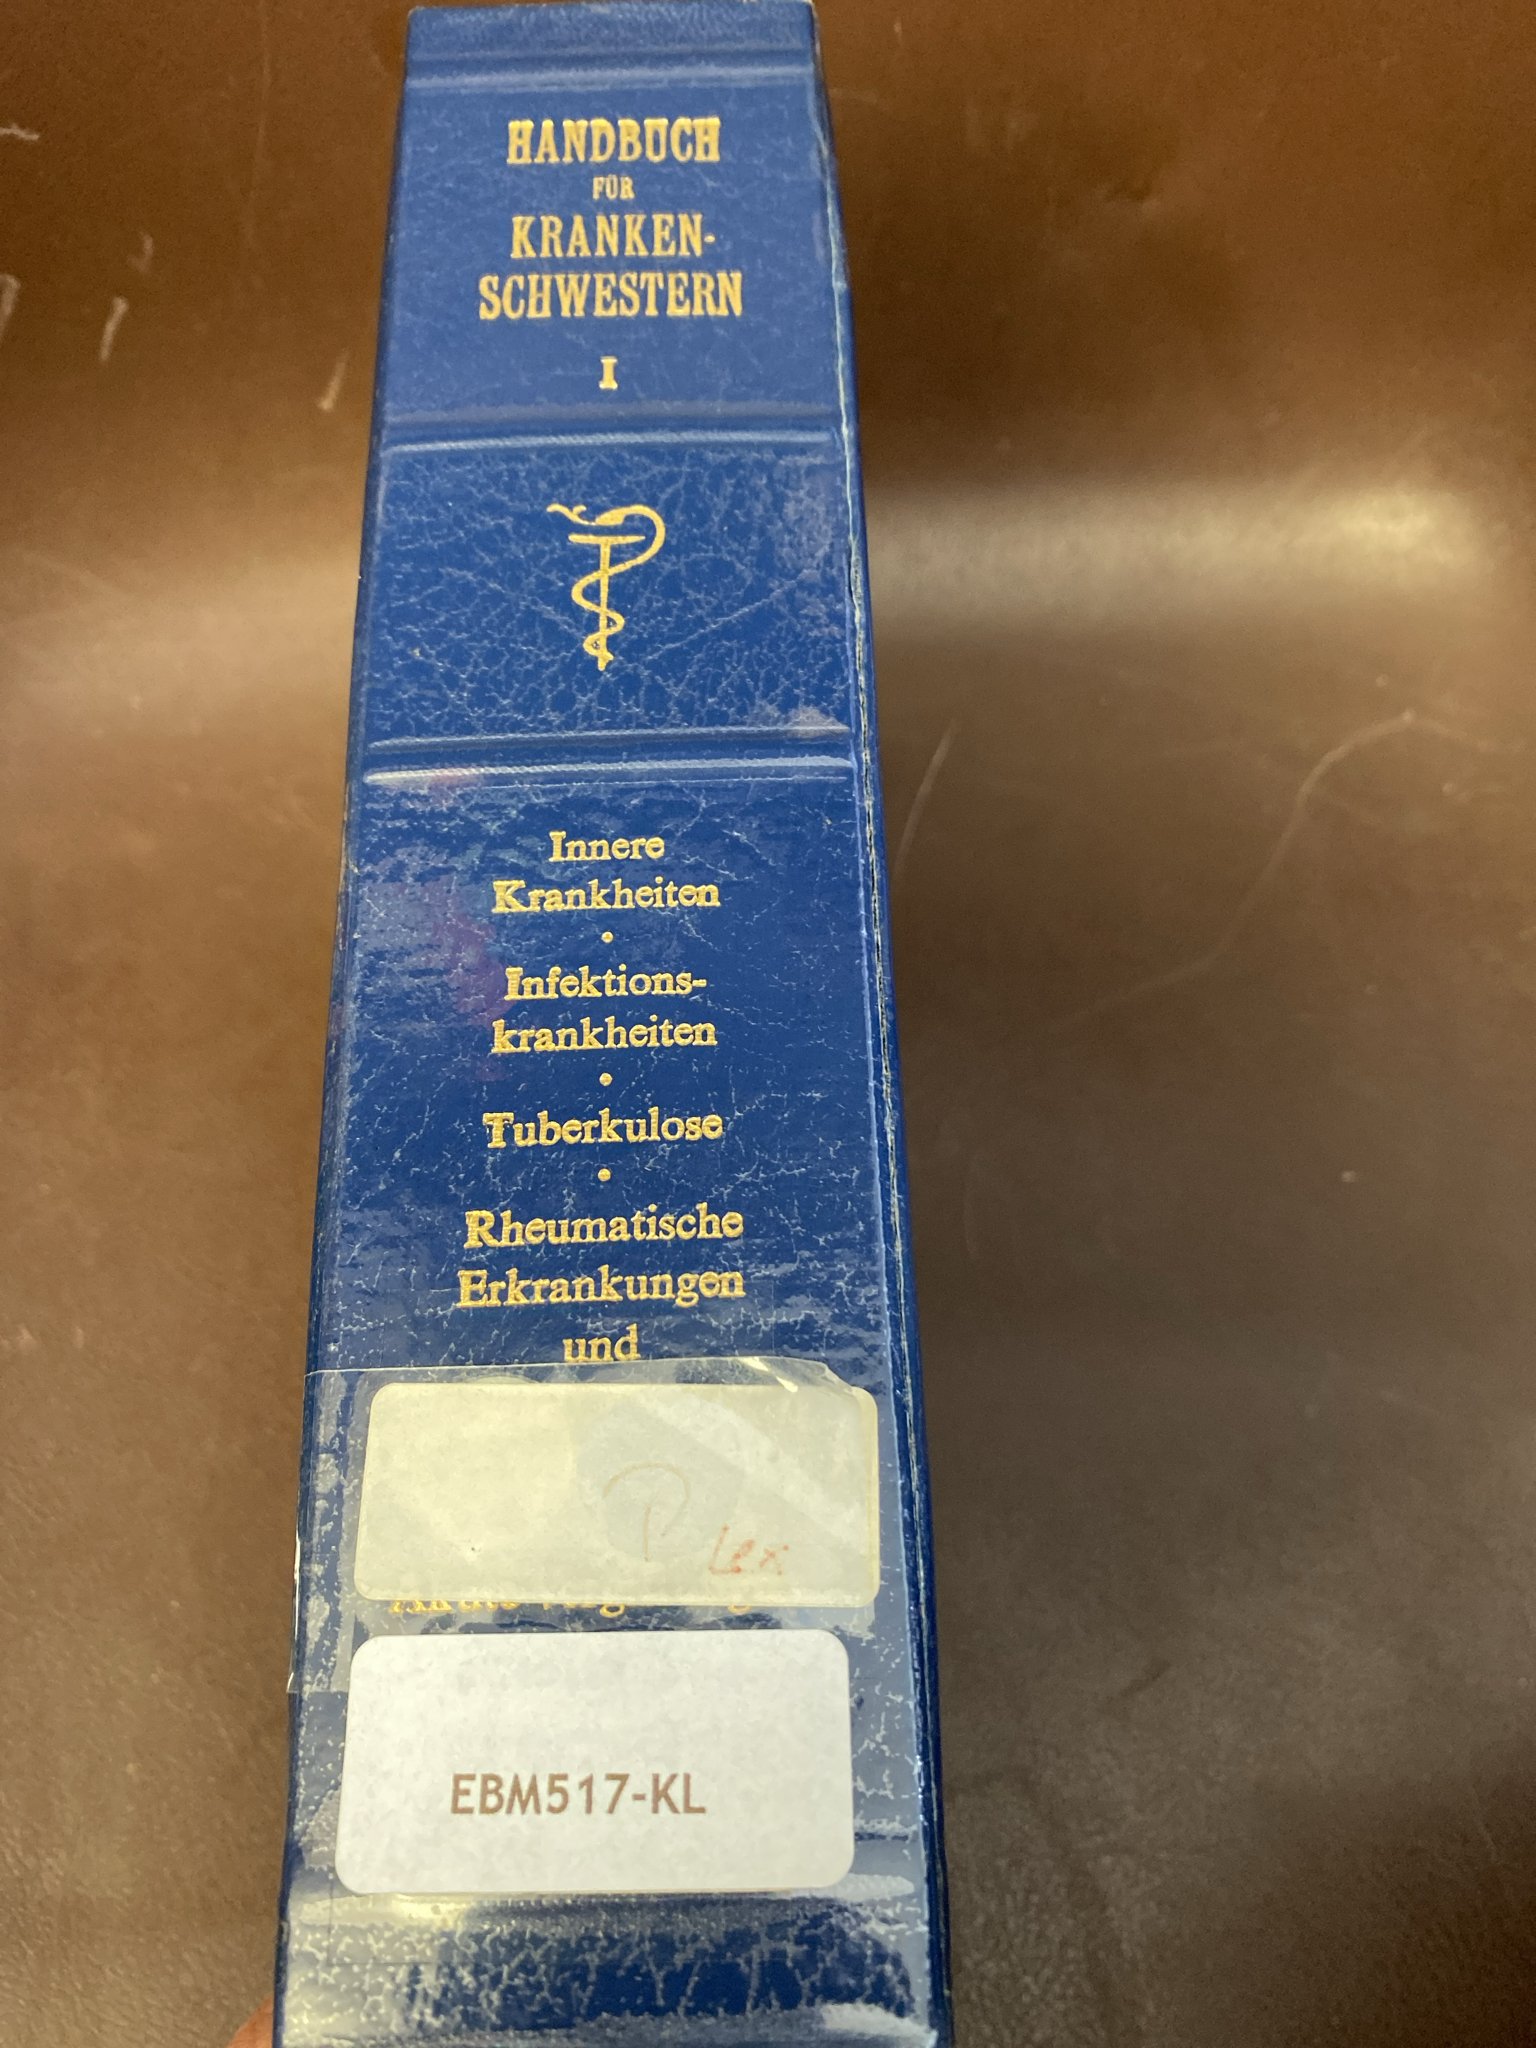 Handbuch für Krankenschwestern (Krankenhausmuseum Bielefeld e.V. CC BY-NC-SA)